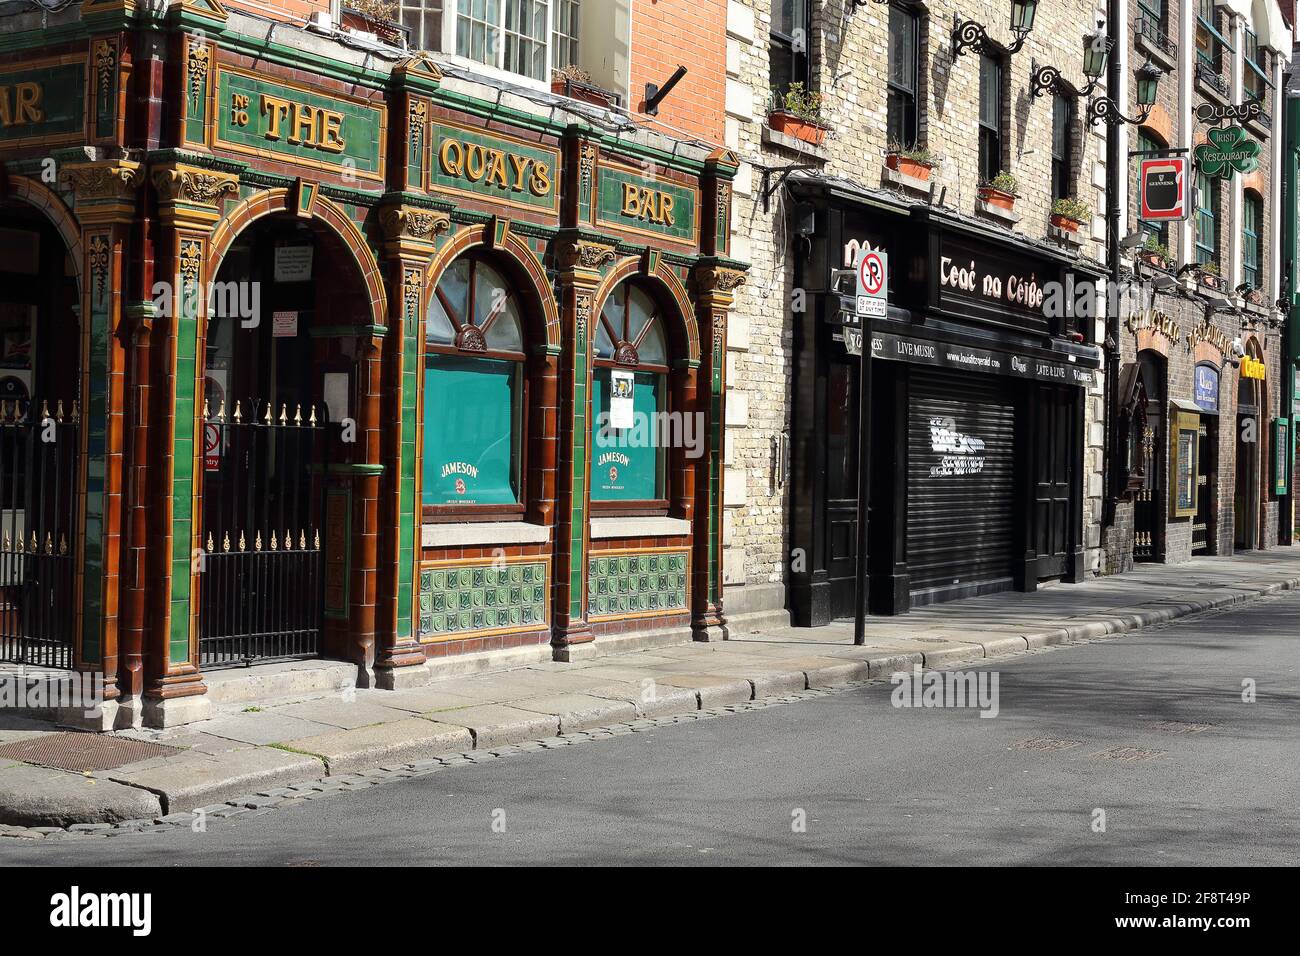 The Quays pub in temple bar Dublin, Ireland Stock Photo